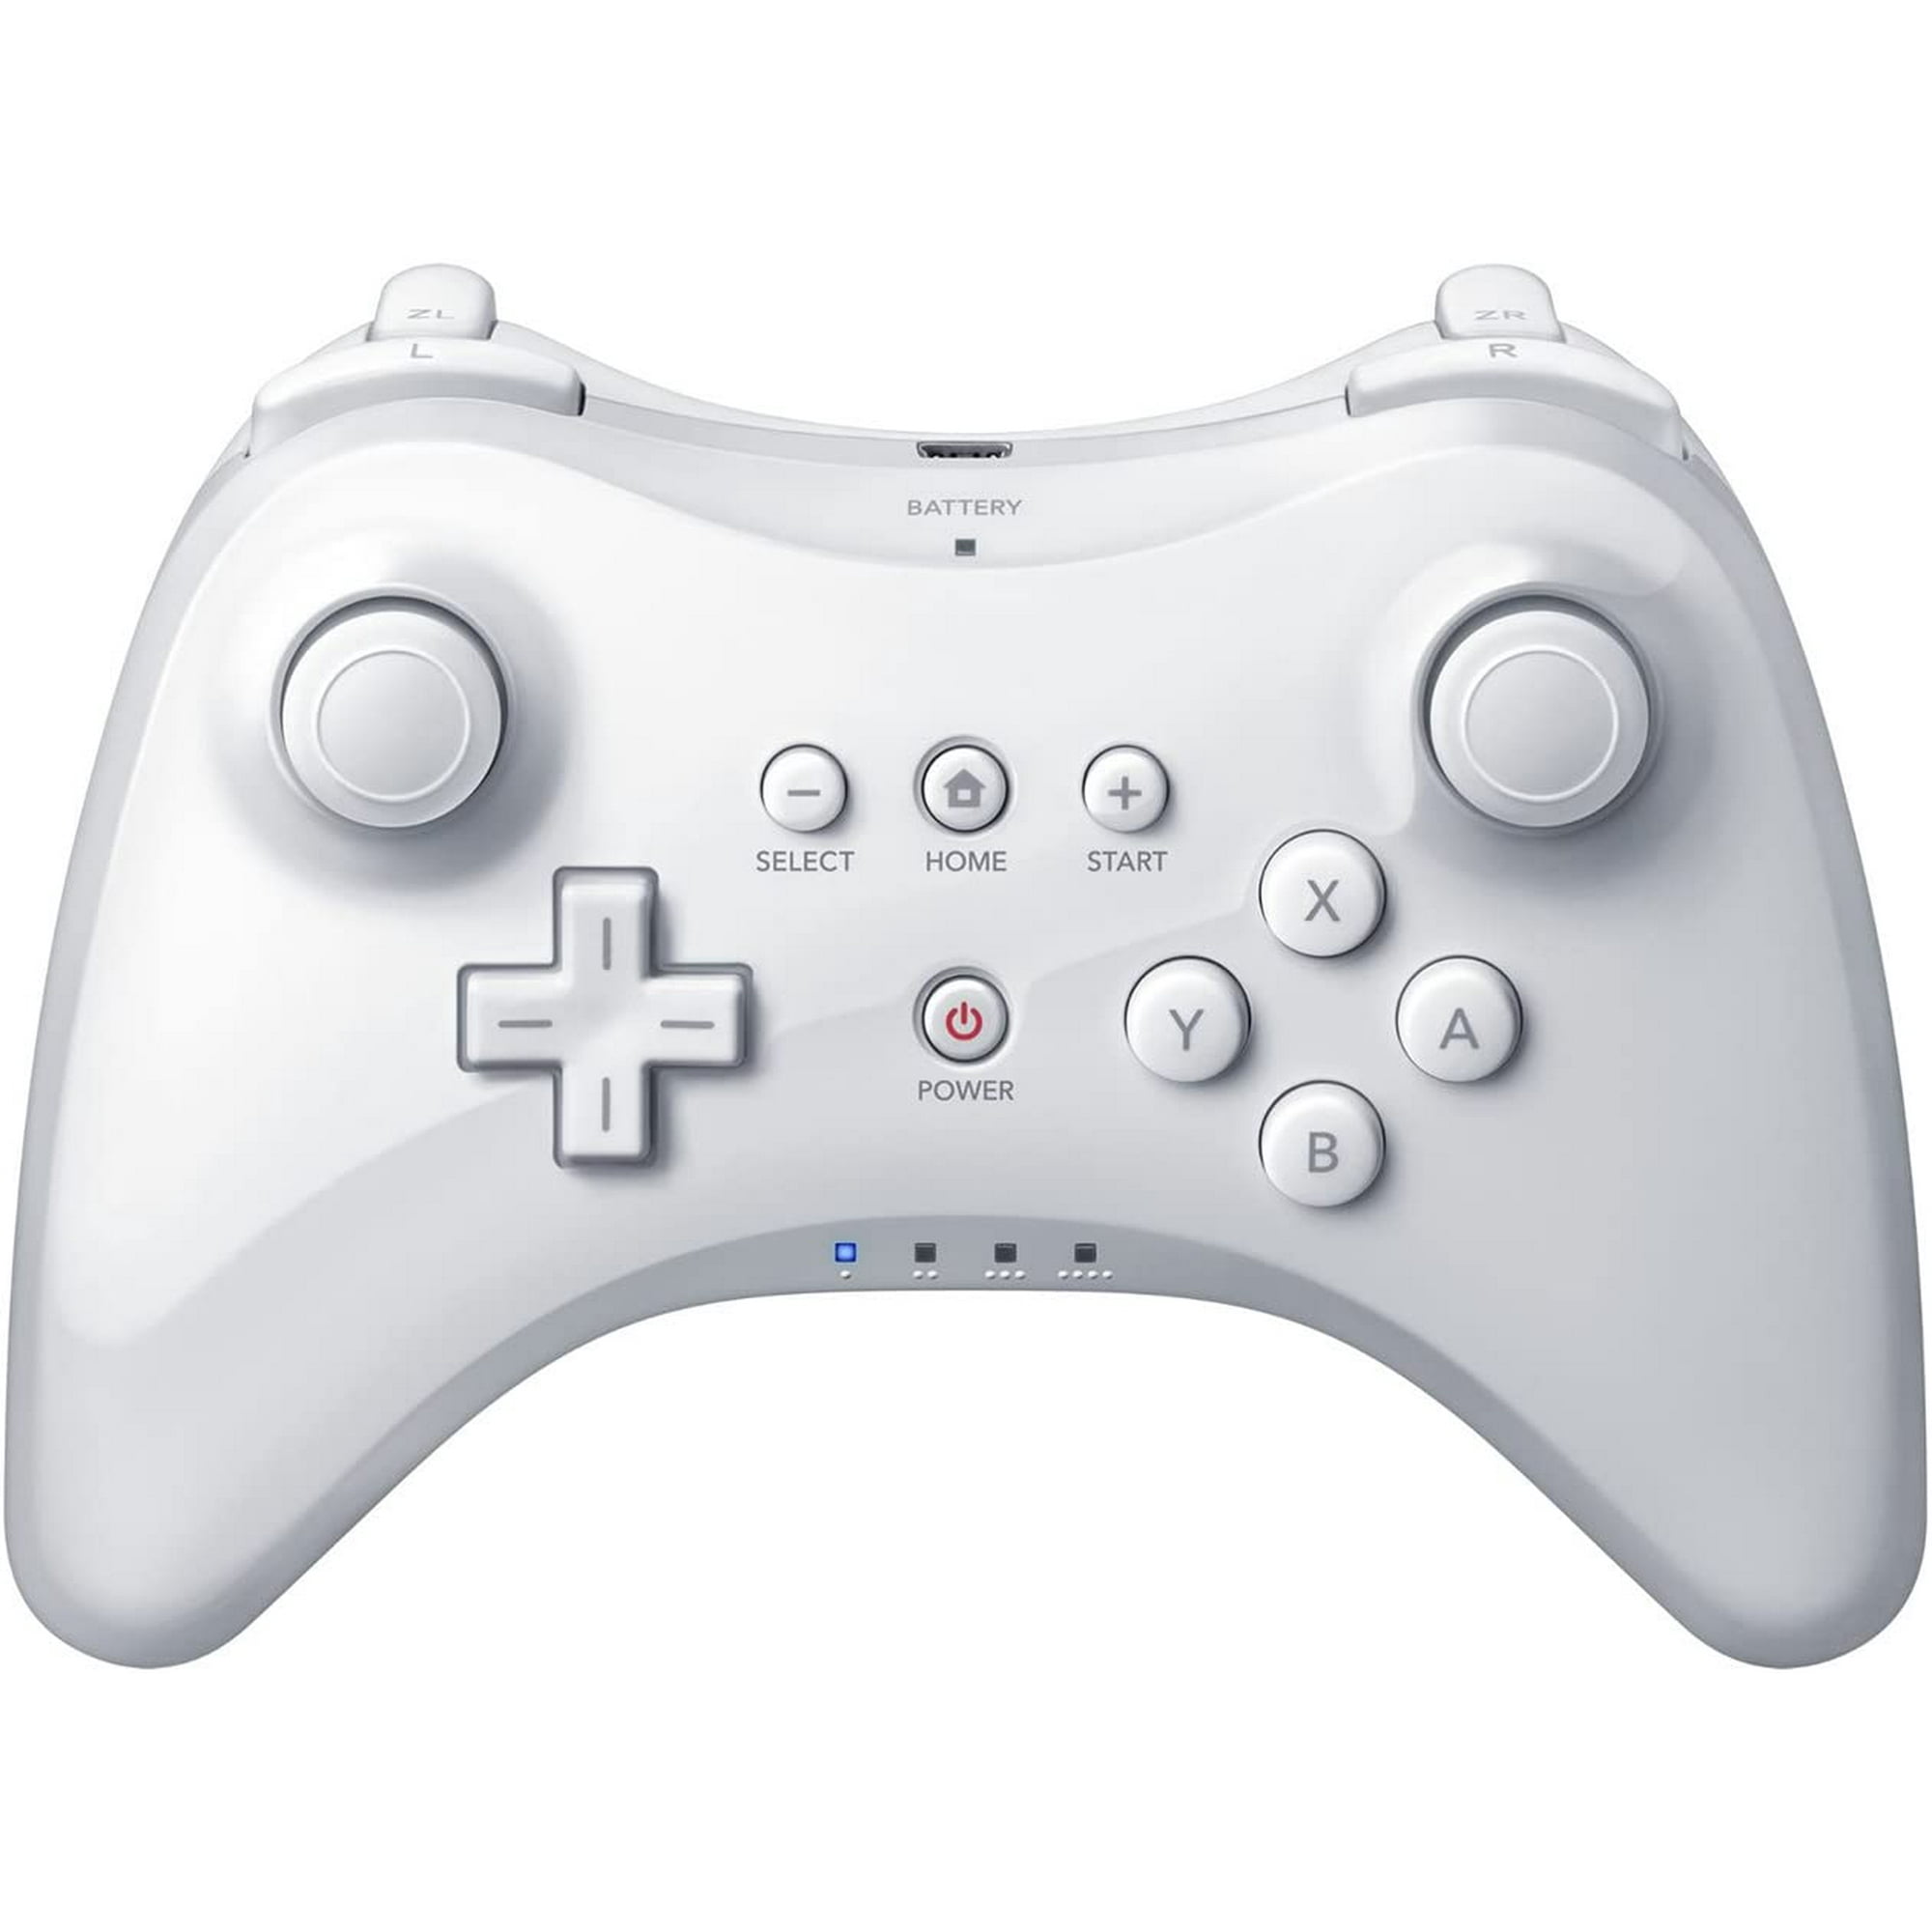 Verwarren Elektrisch Aankoop QUMOX Wireless Controller Gamepad Joypad Remote for Nintendo Wii U Pro,  White | Walmart Canada